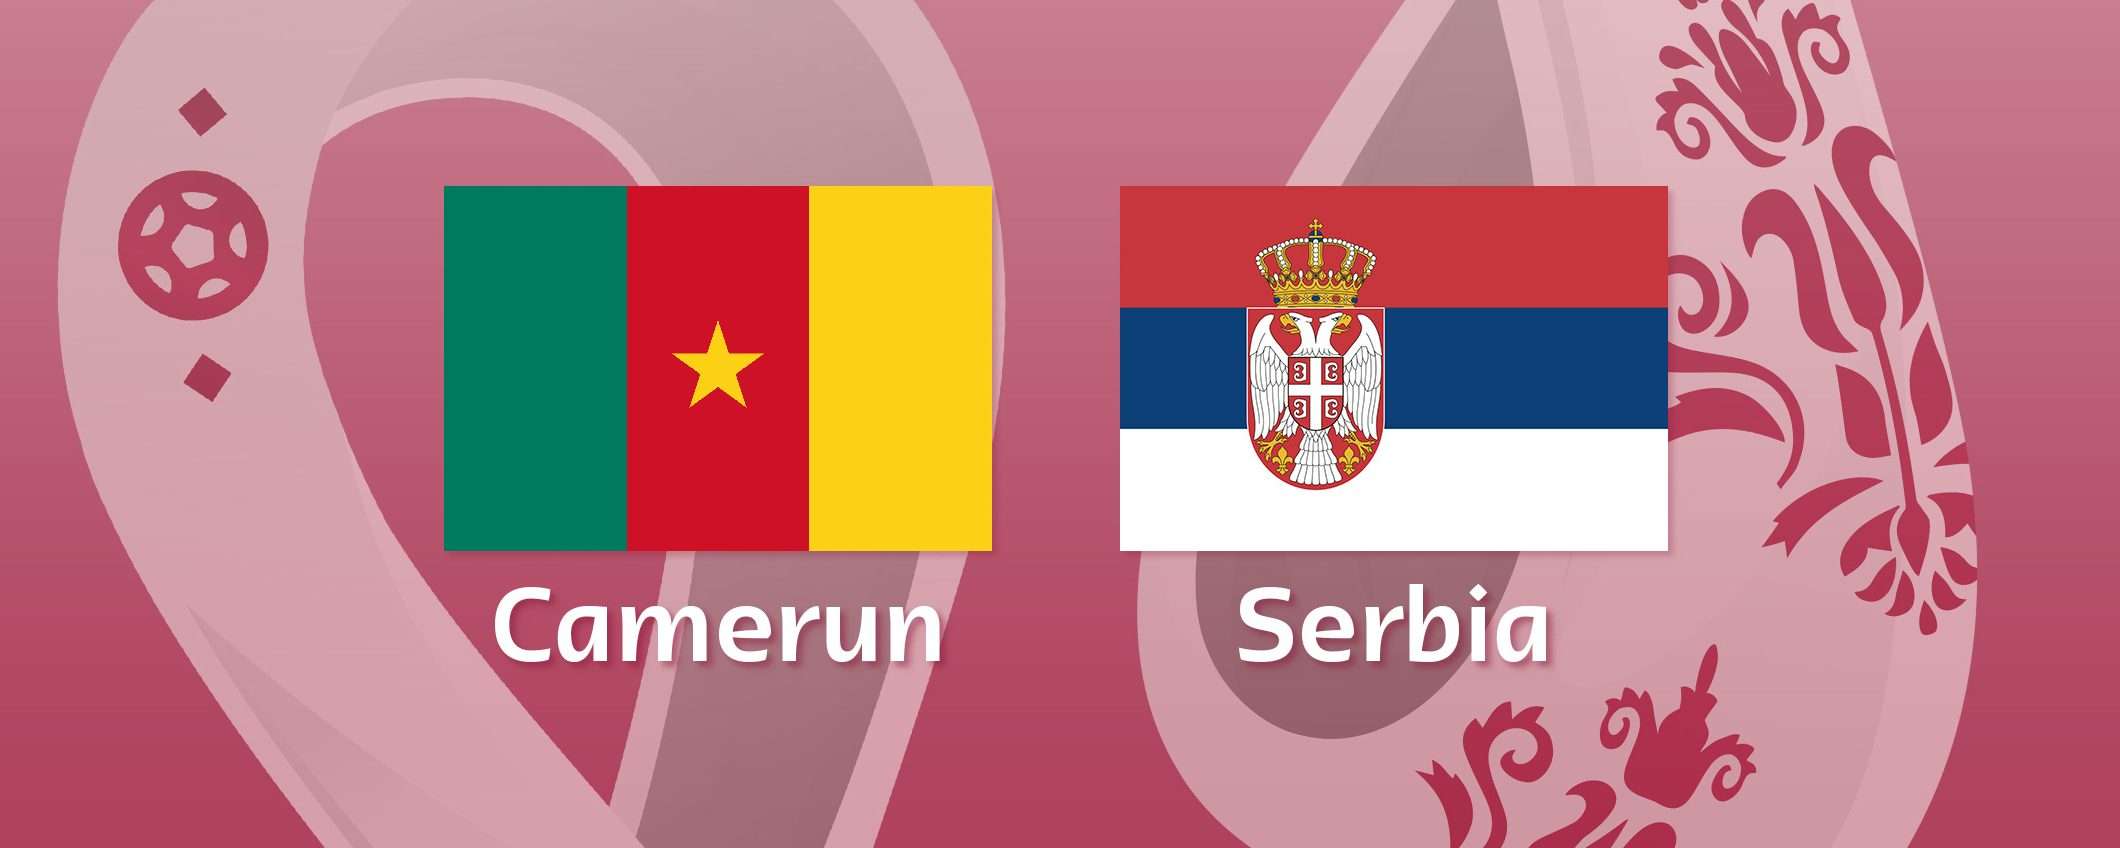 Come vedere Camerun-Serbia in streaming